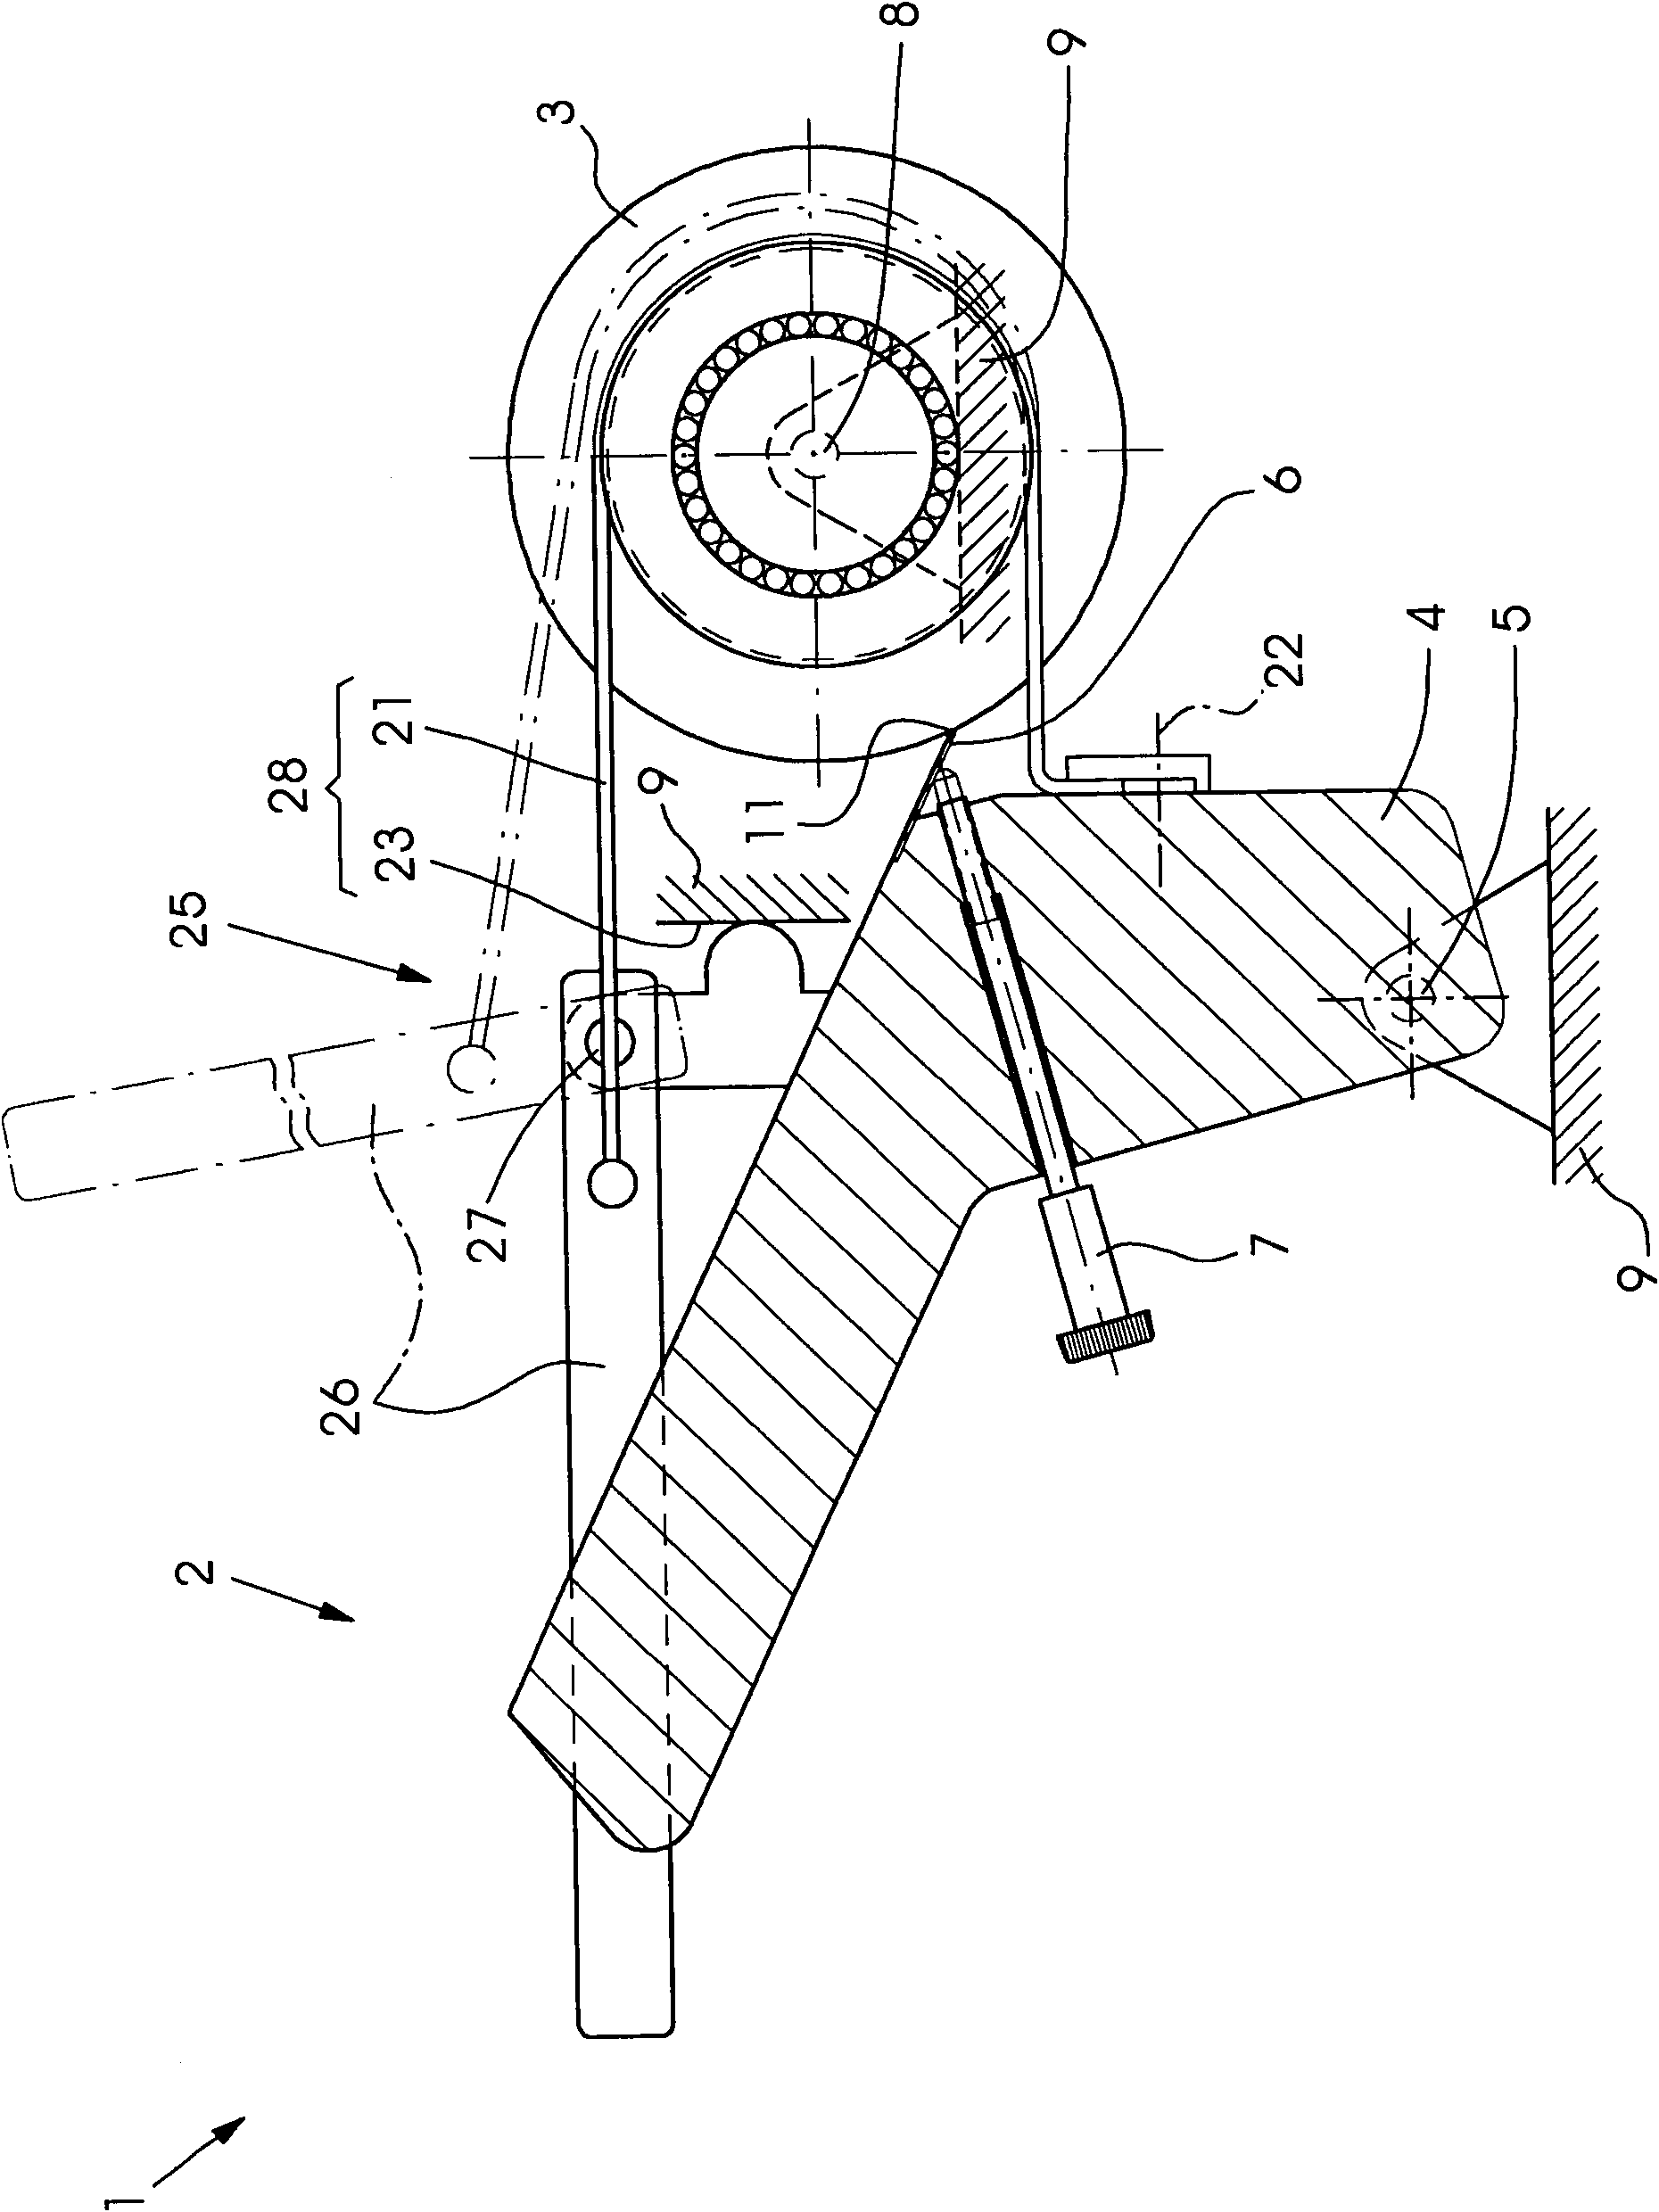 Apparatus for metering printing ink